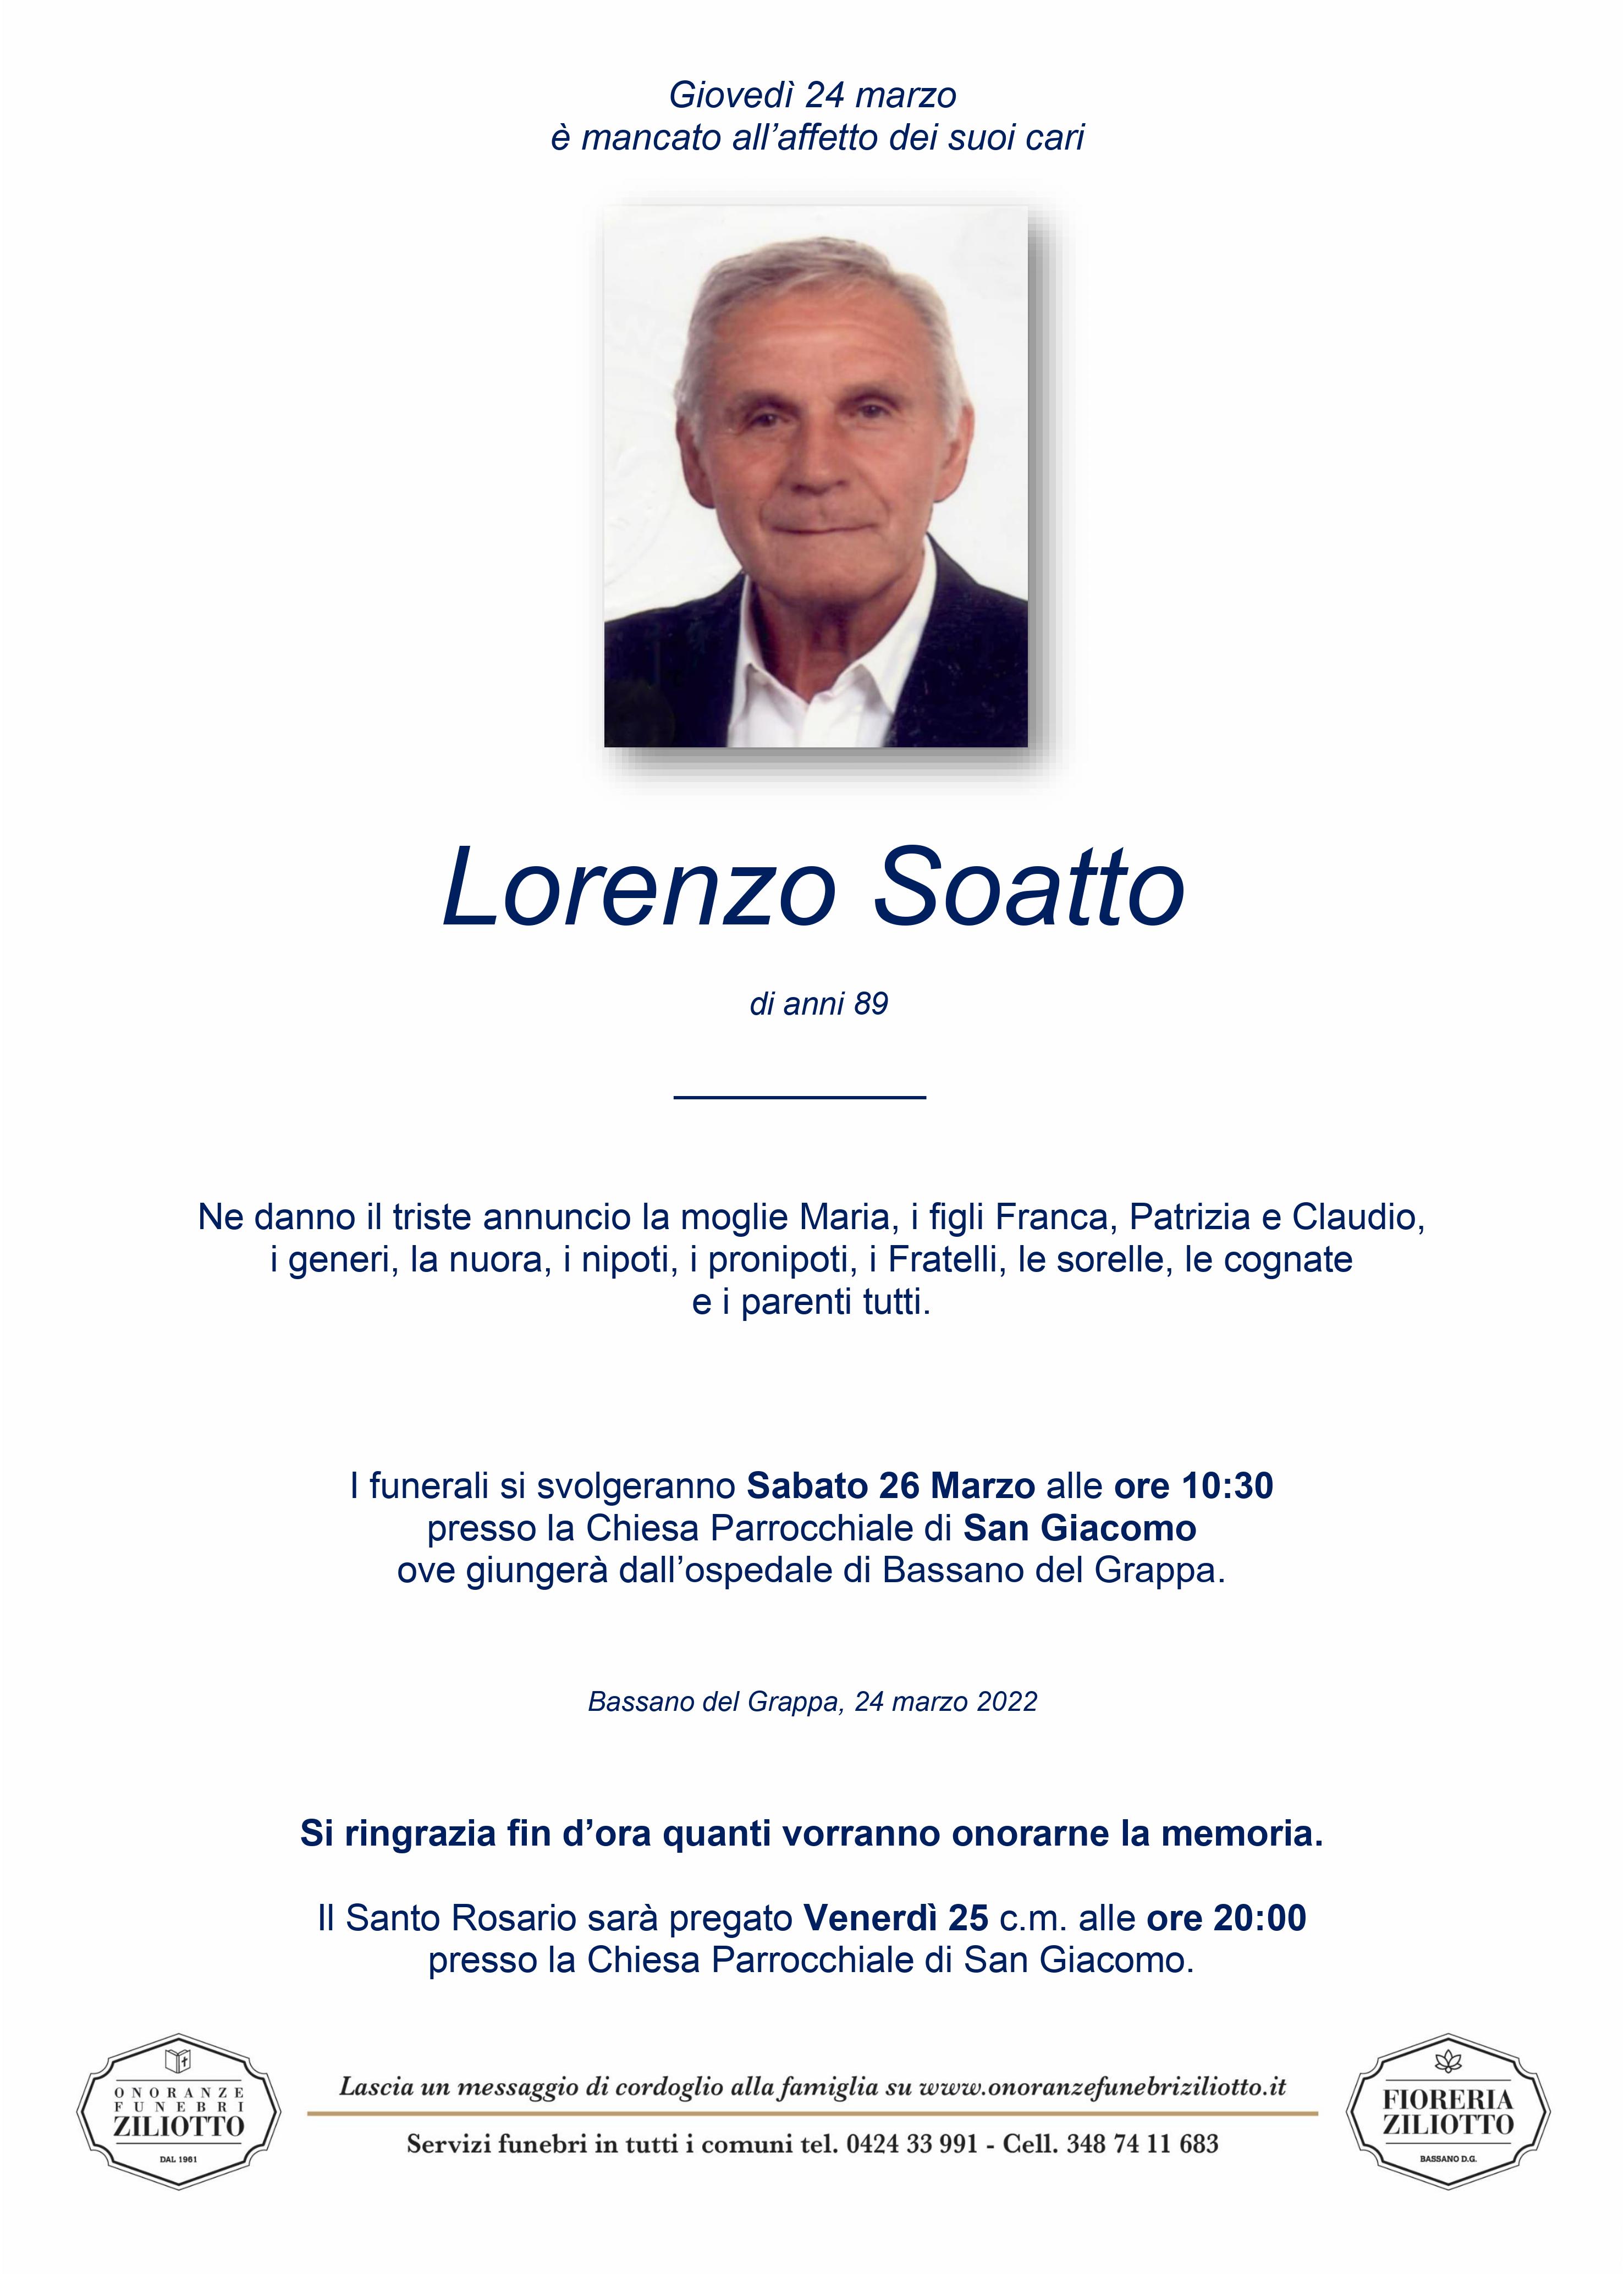 Lorenzo Soatto - 89 anni - San giacomo di Romano d' Ezzelino